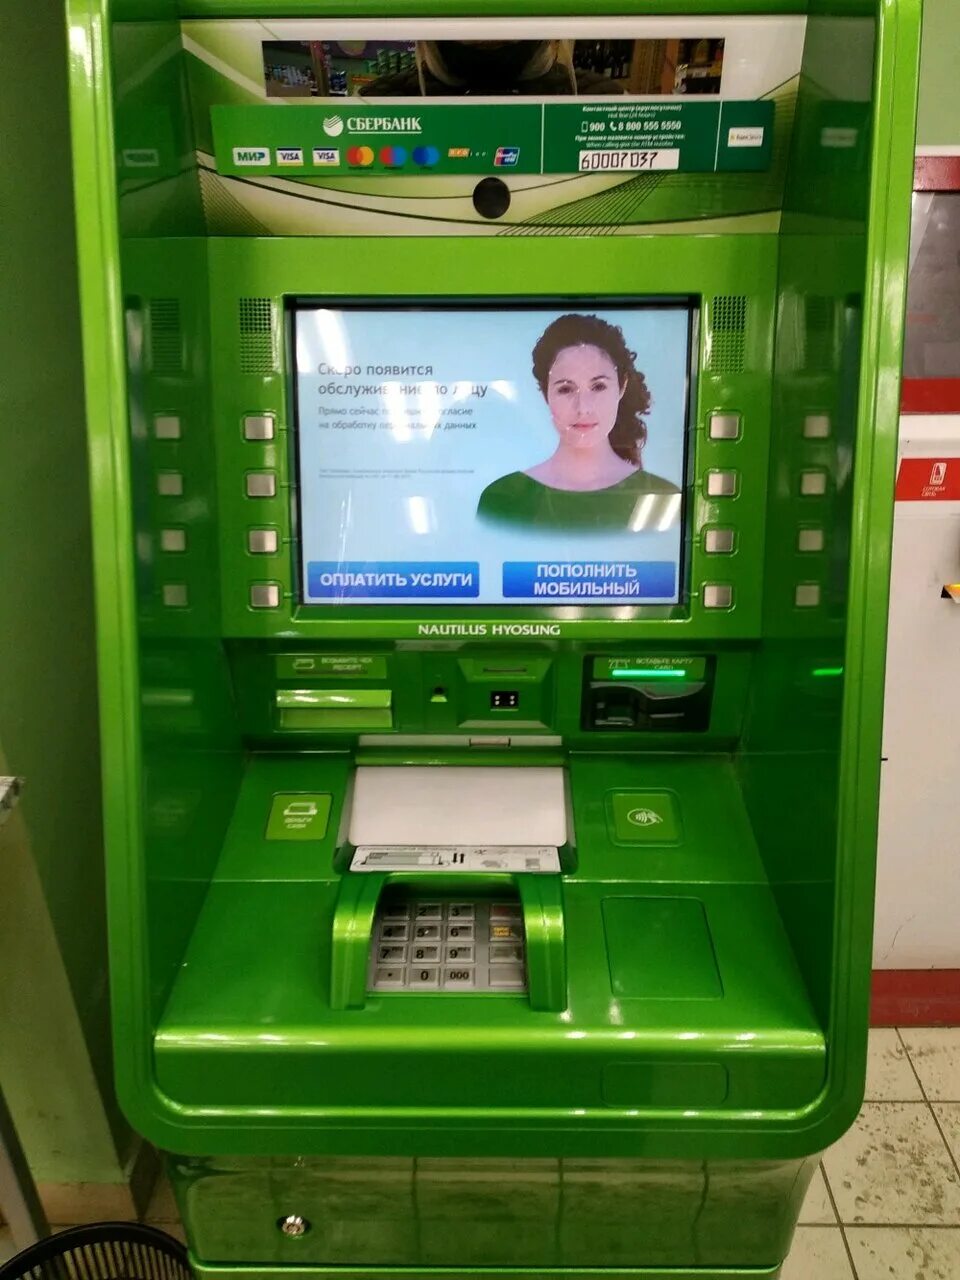 Банкомат сбербанка челны. Дисплей банкомата. Банкомат Сбербанка. Дисплей банкомата Сбербанка. Экран терминала Сбербанка.